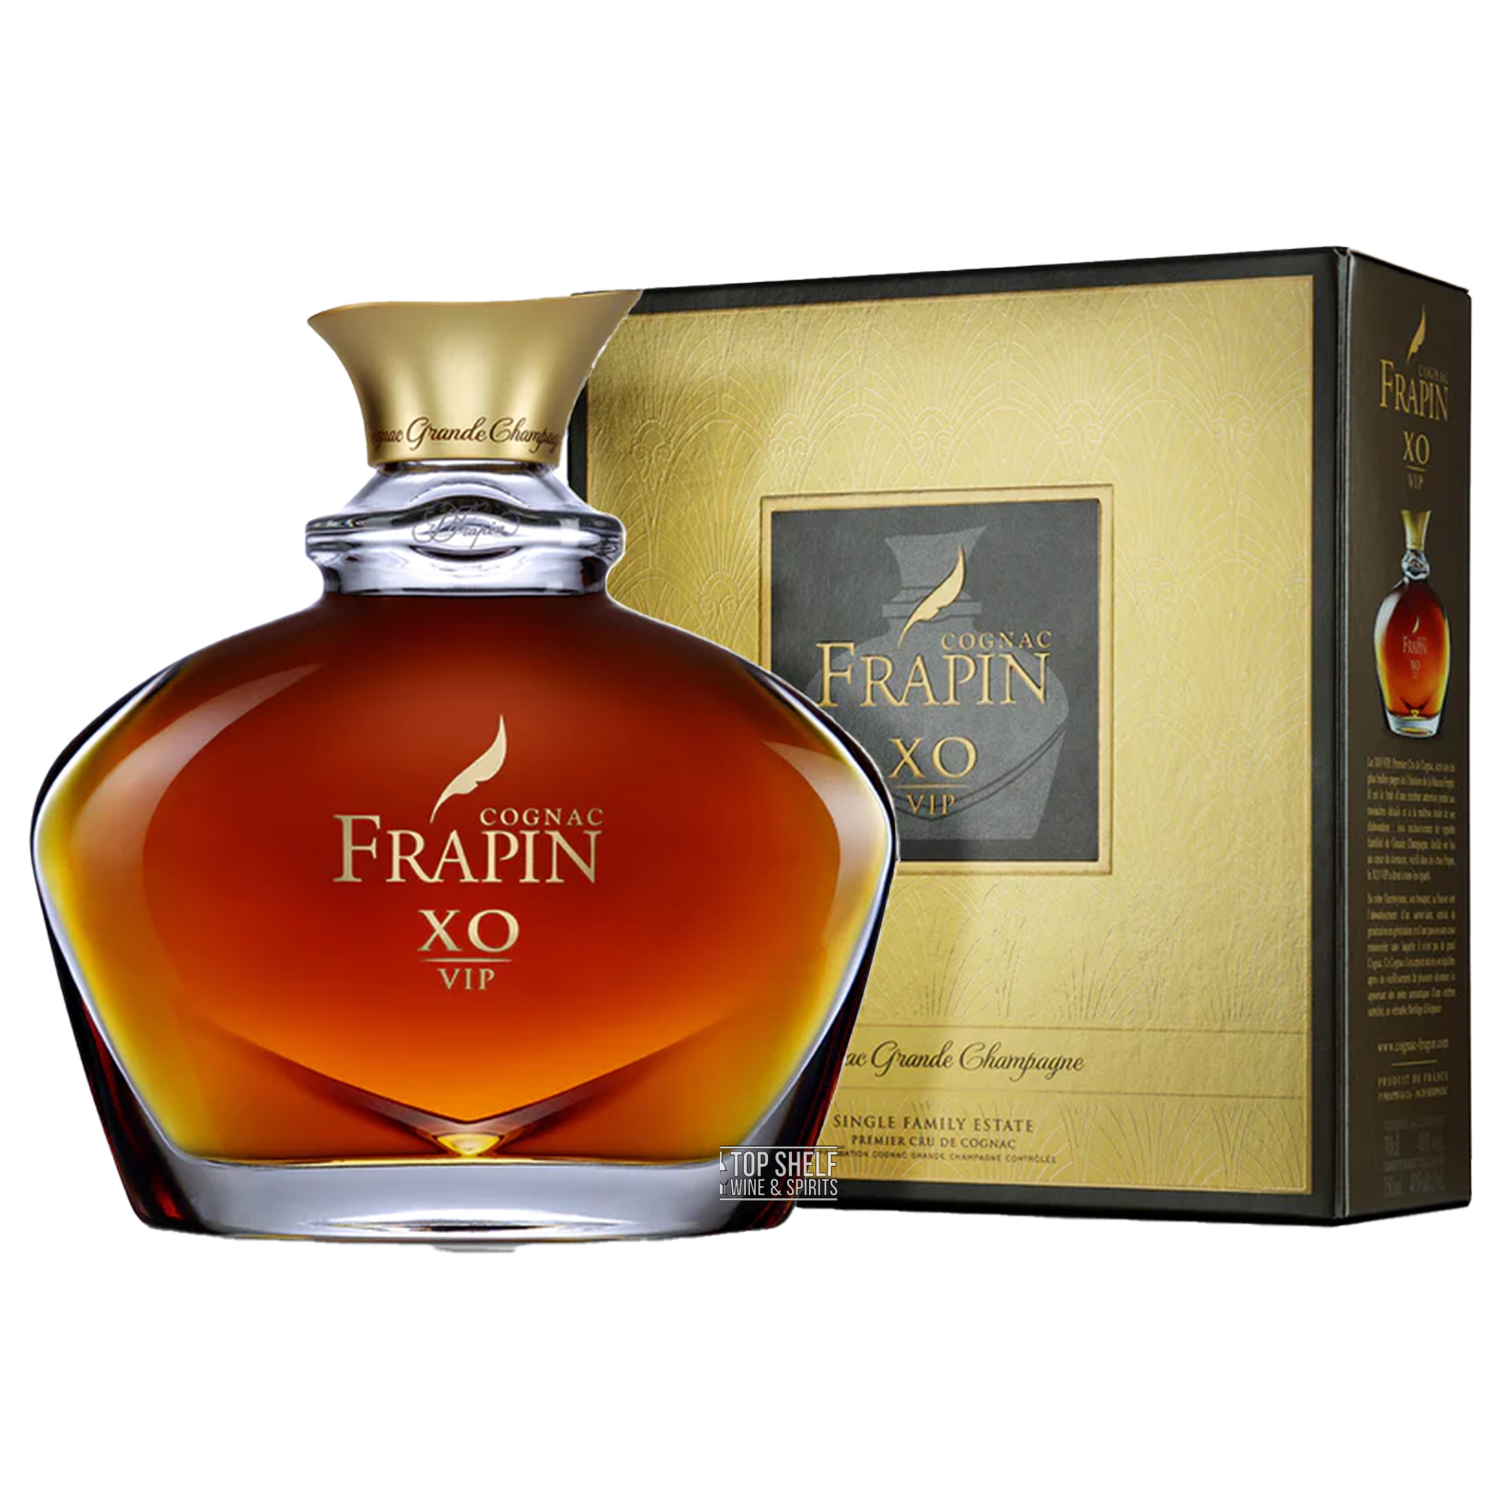 Frapin XO VIP Cognac